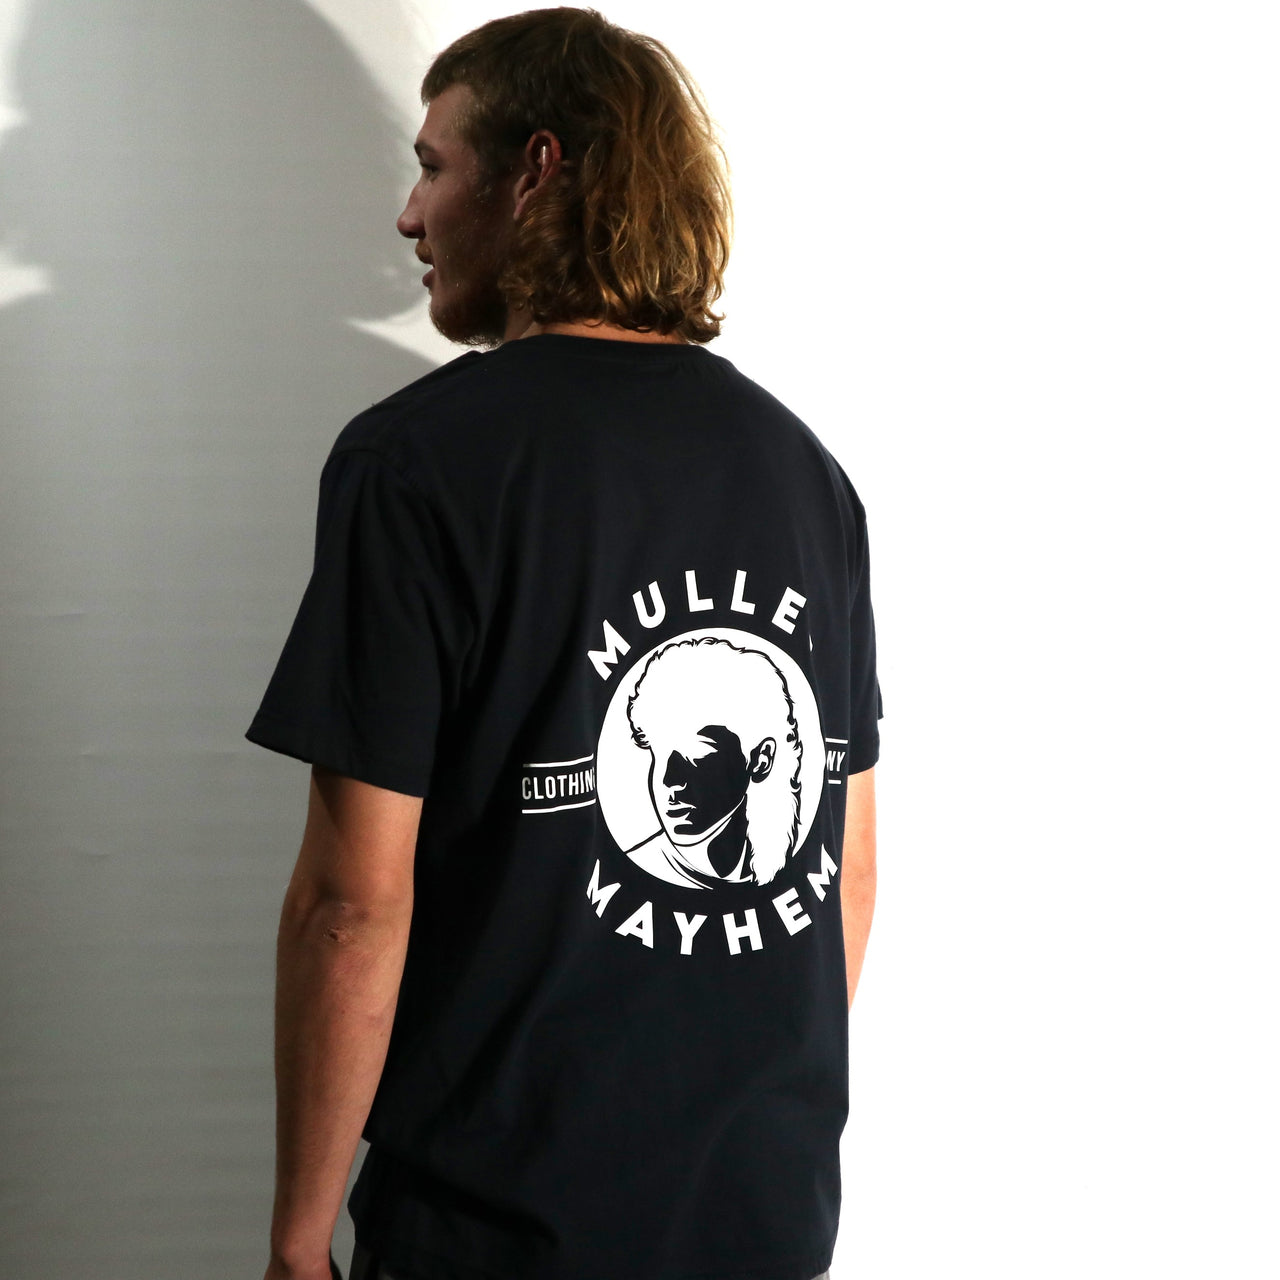 Mullet Mayhem Clothing Co (t-shirt)